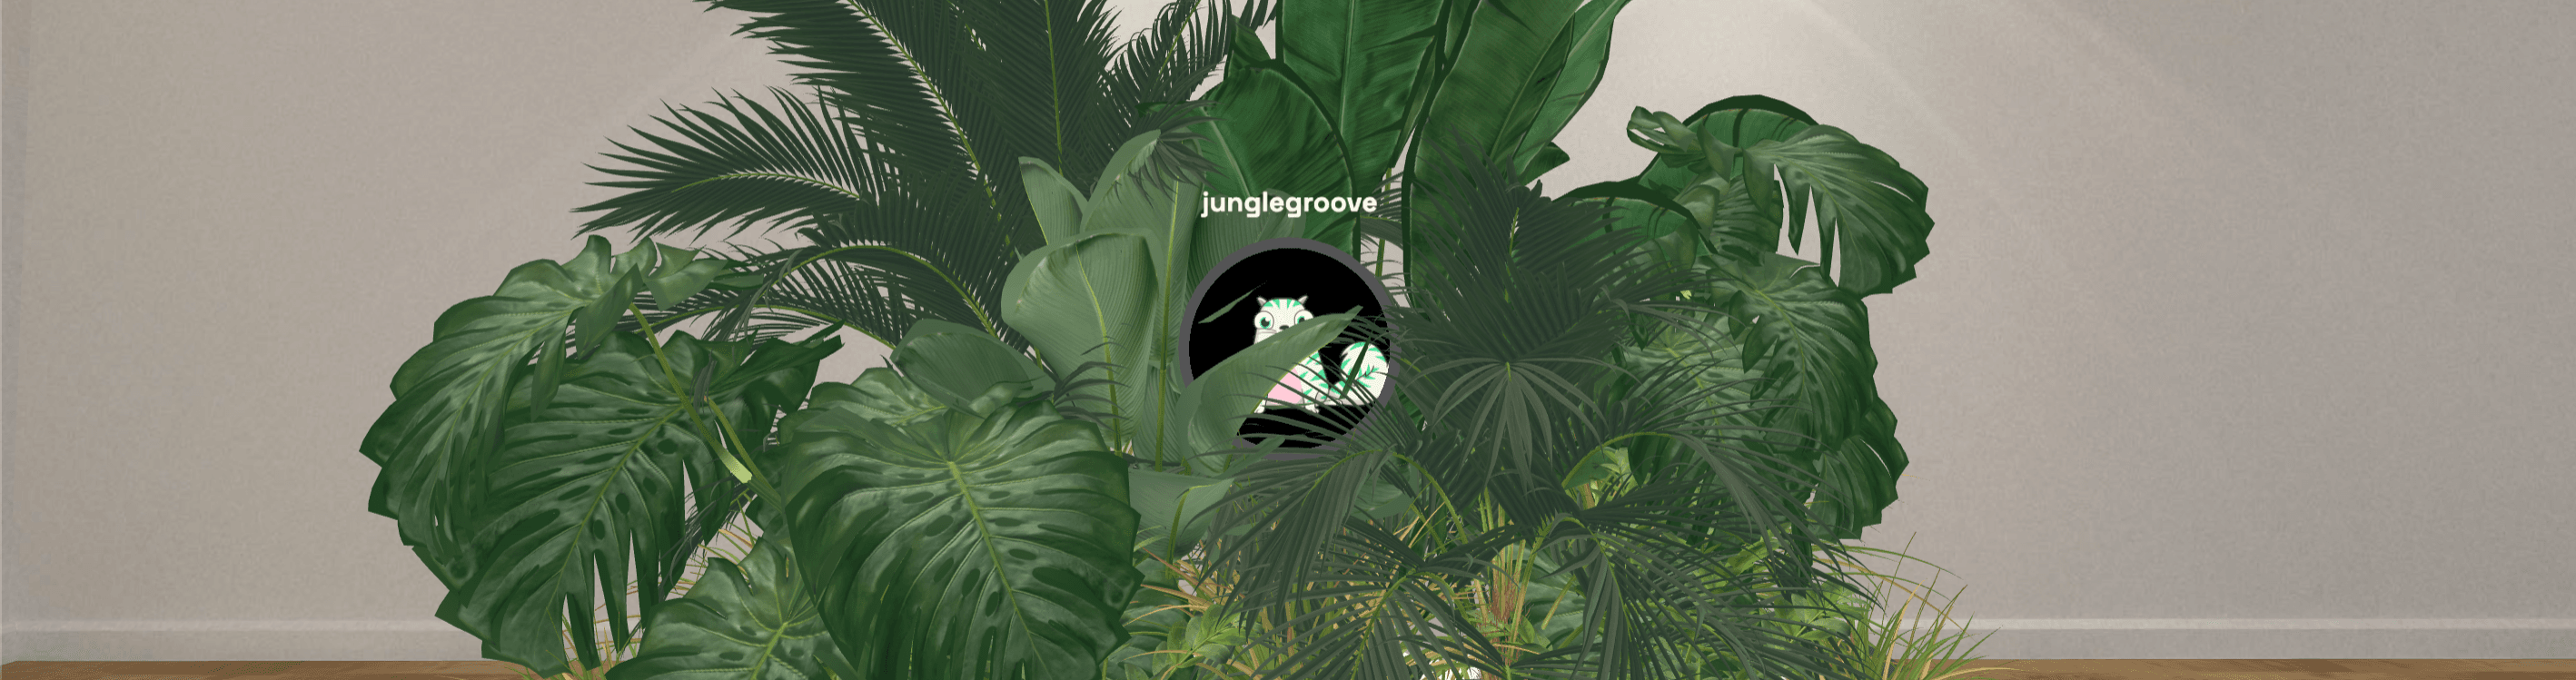 Junglegroove banner